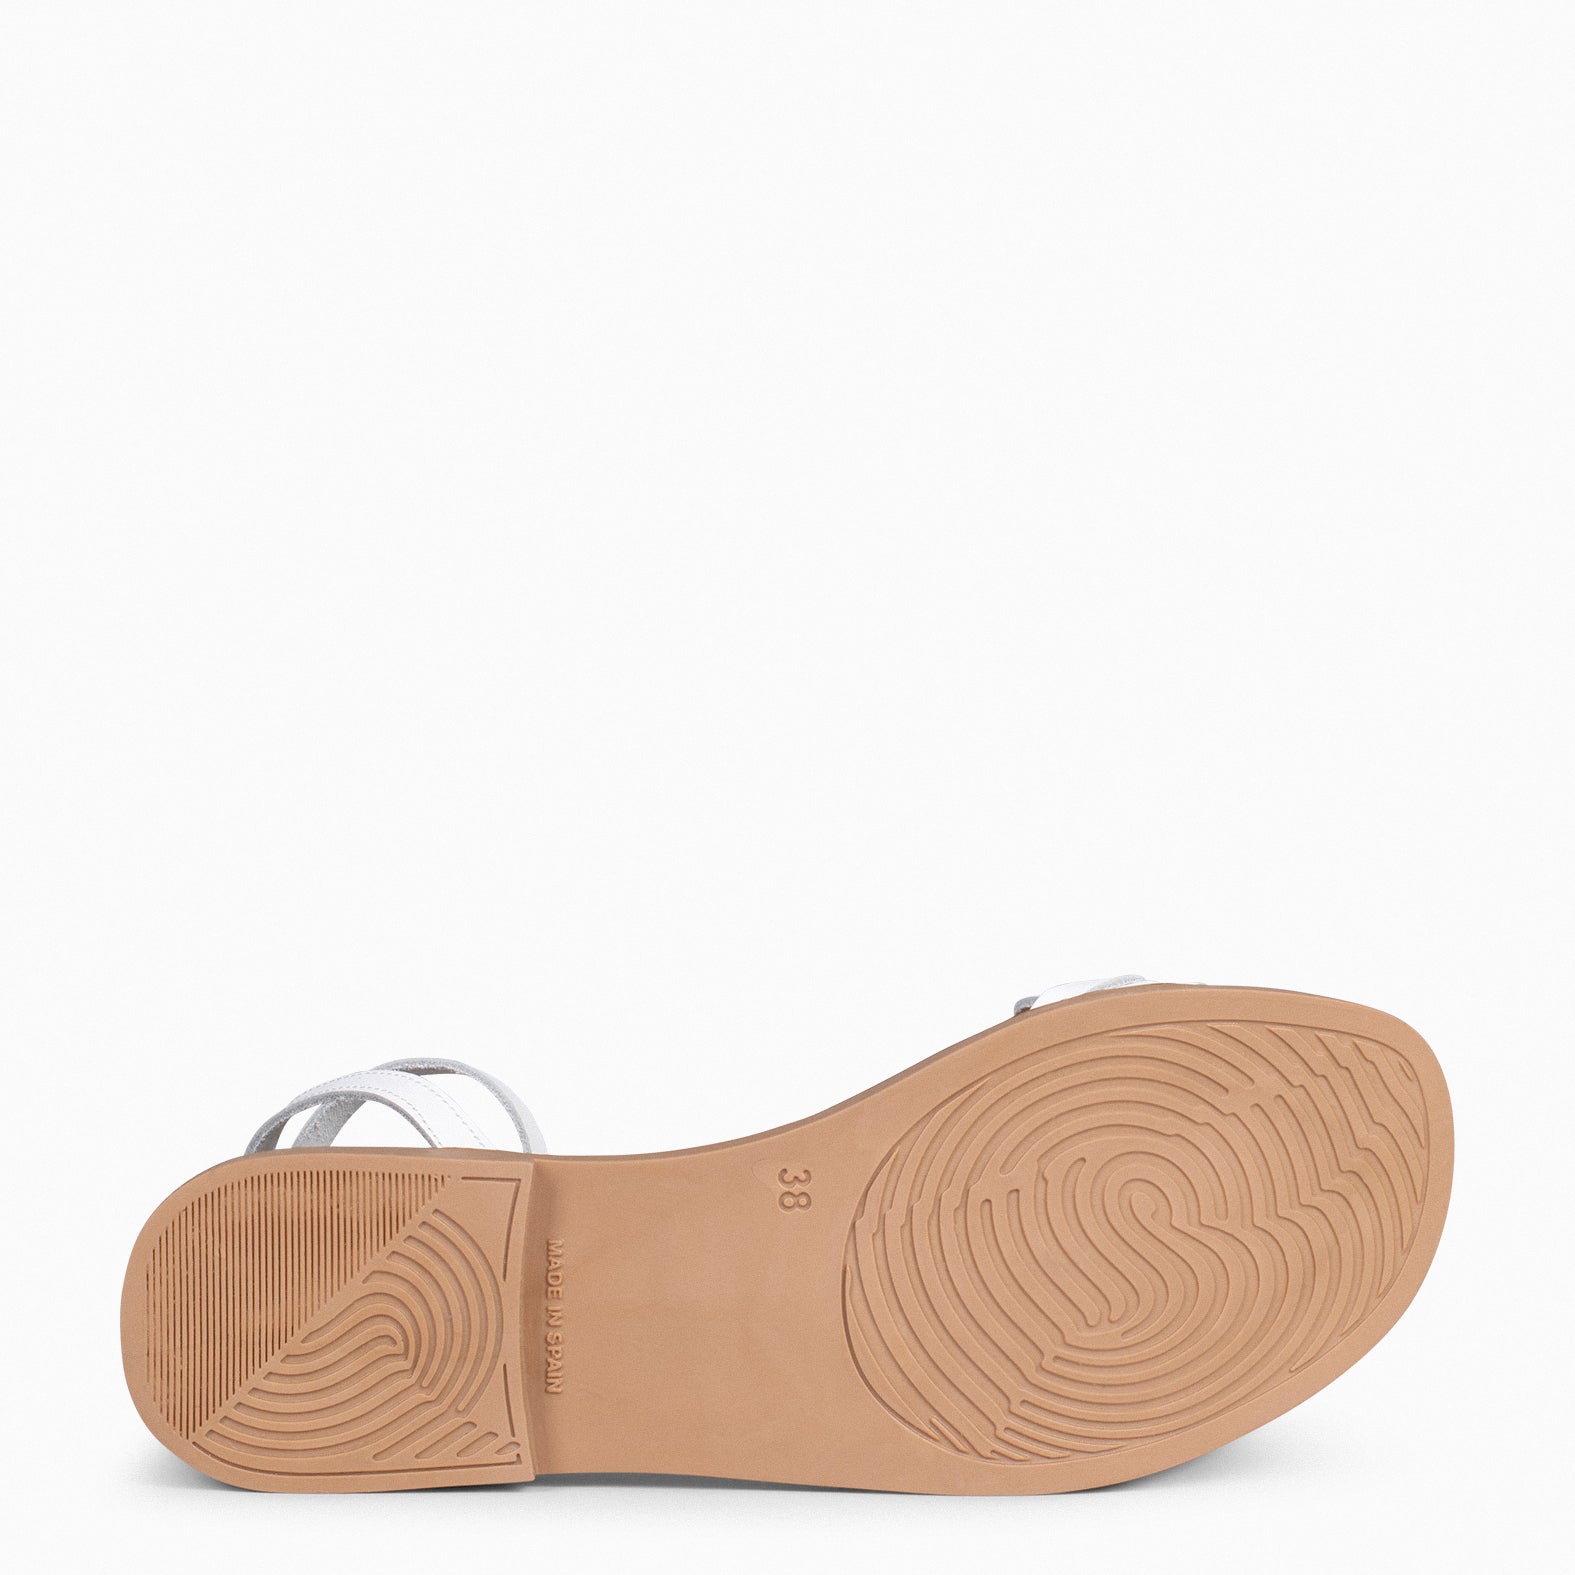 ARECA - WHITE Women's Flat Sandals